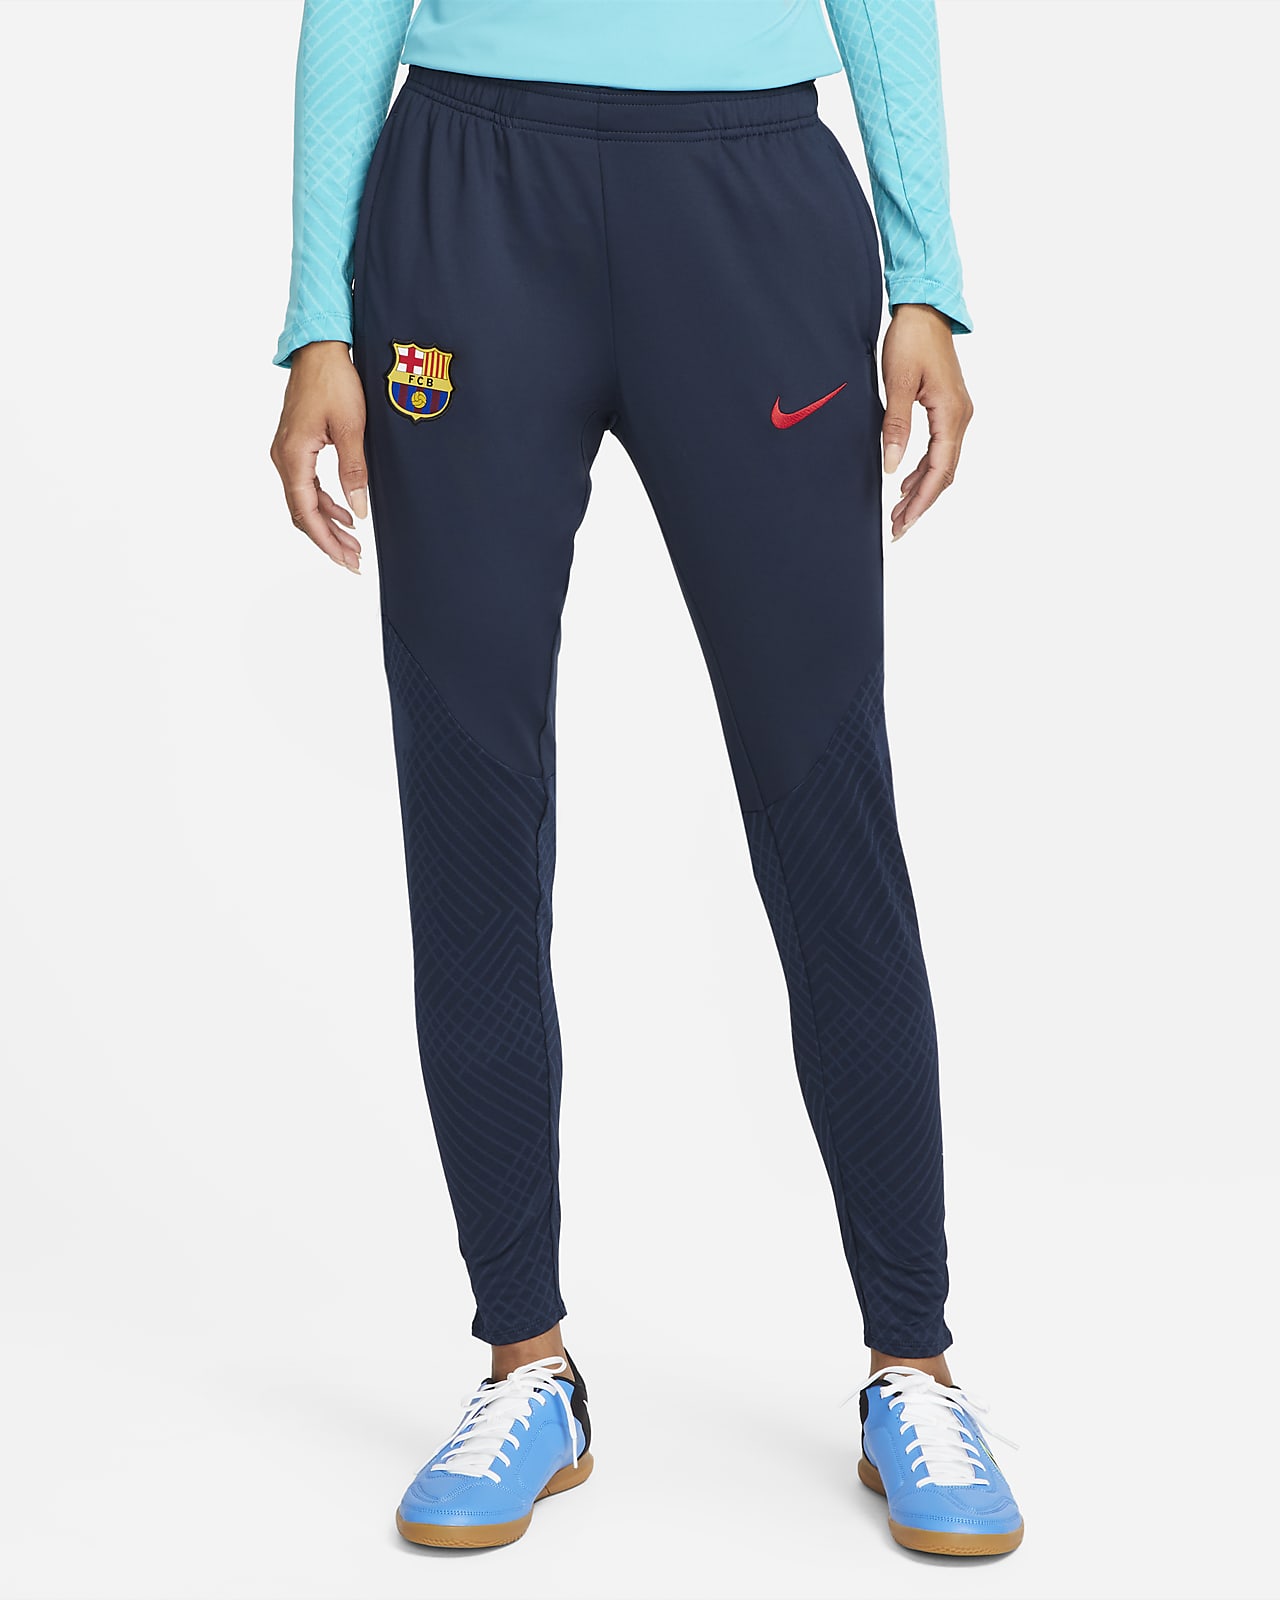 F.C. Barcelona Women's Nike Dri-FIT Football Pants. Nike LU